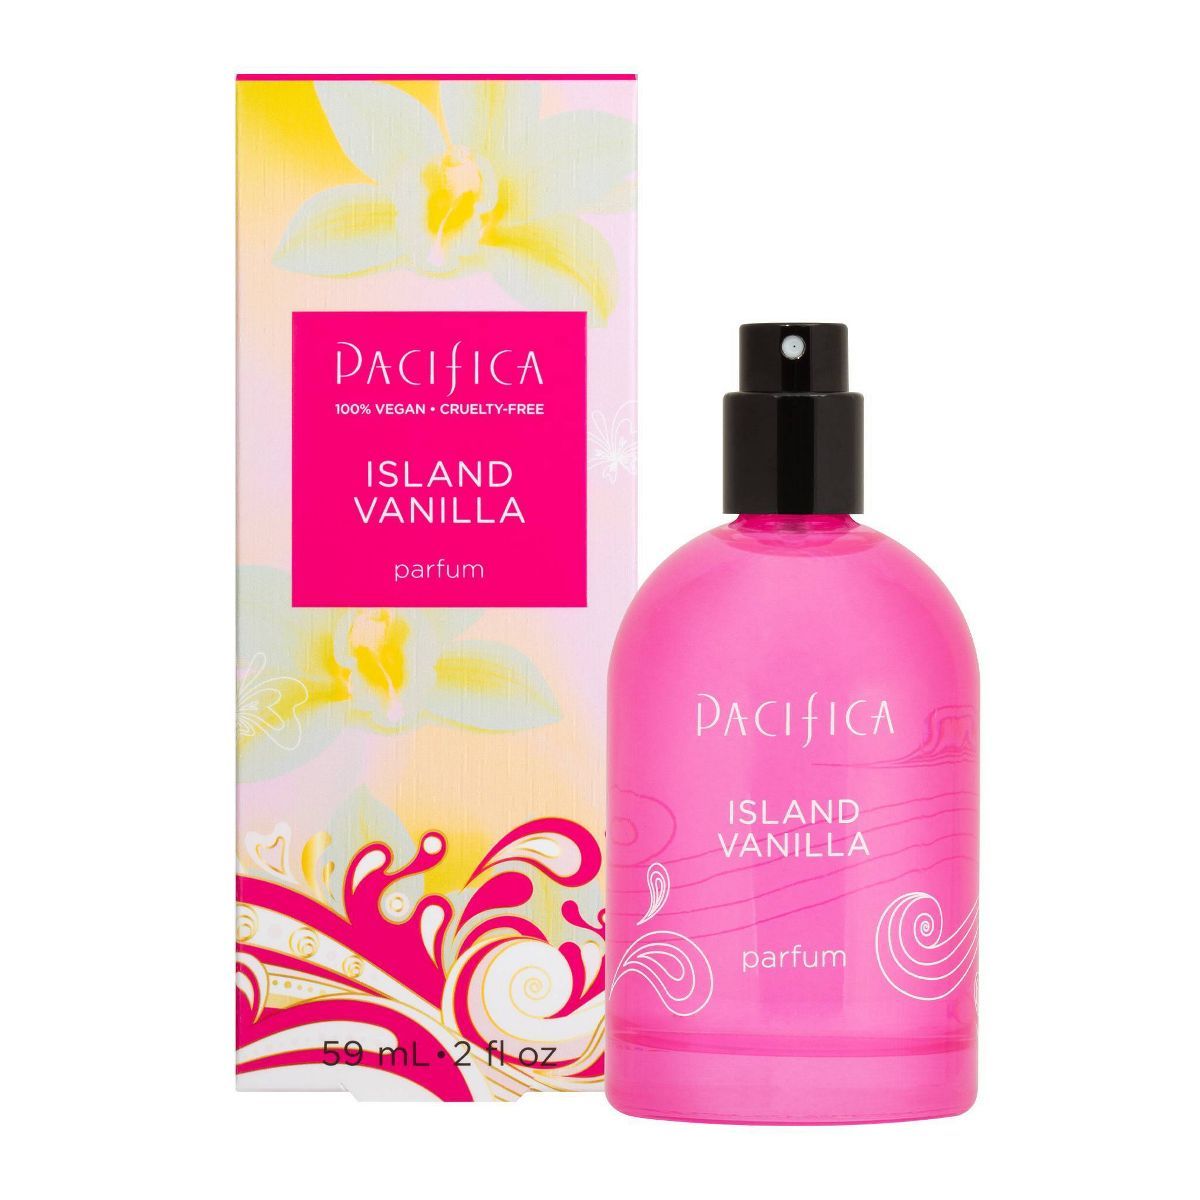 Pacifica Island Vanilla Spray Perfume - 2 fl oz | Target